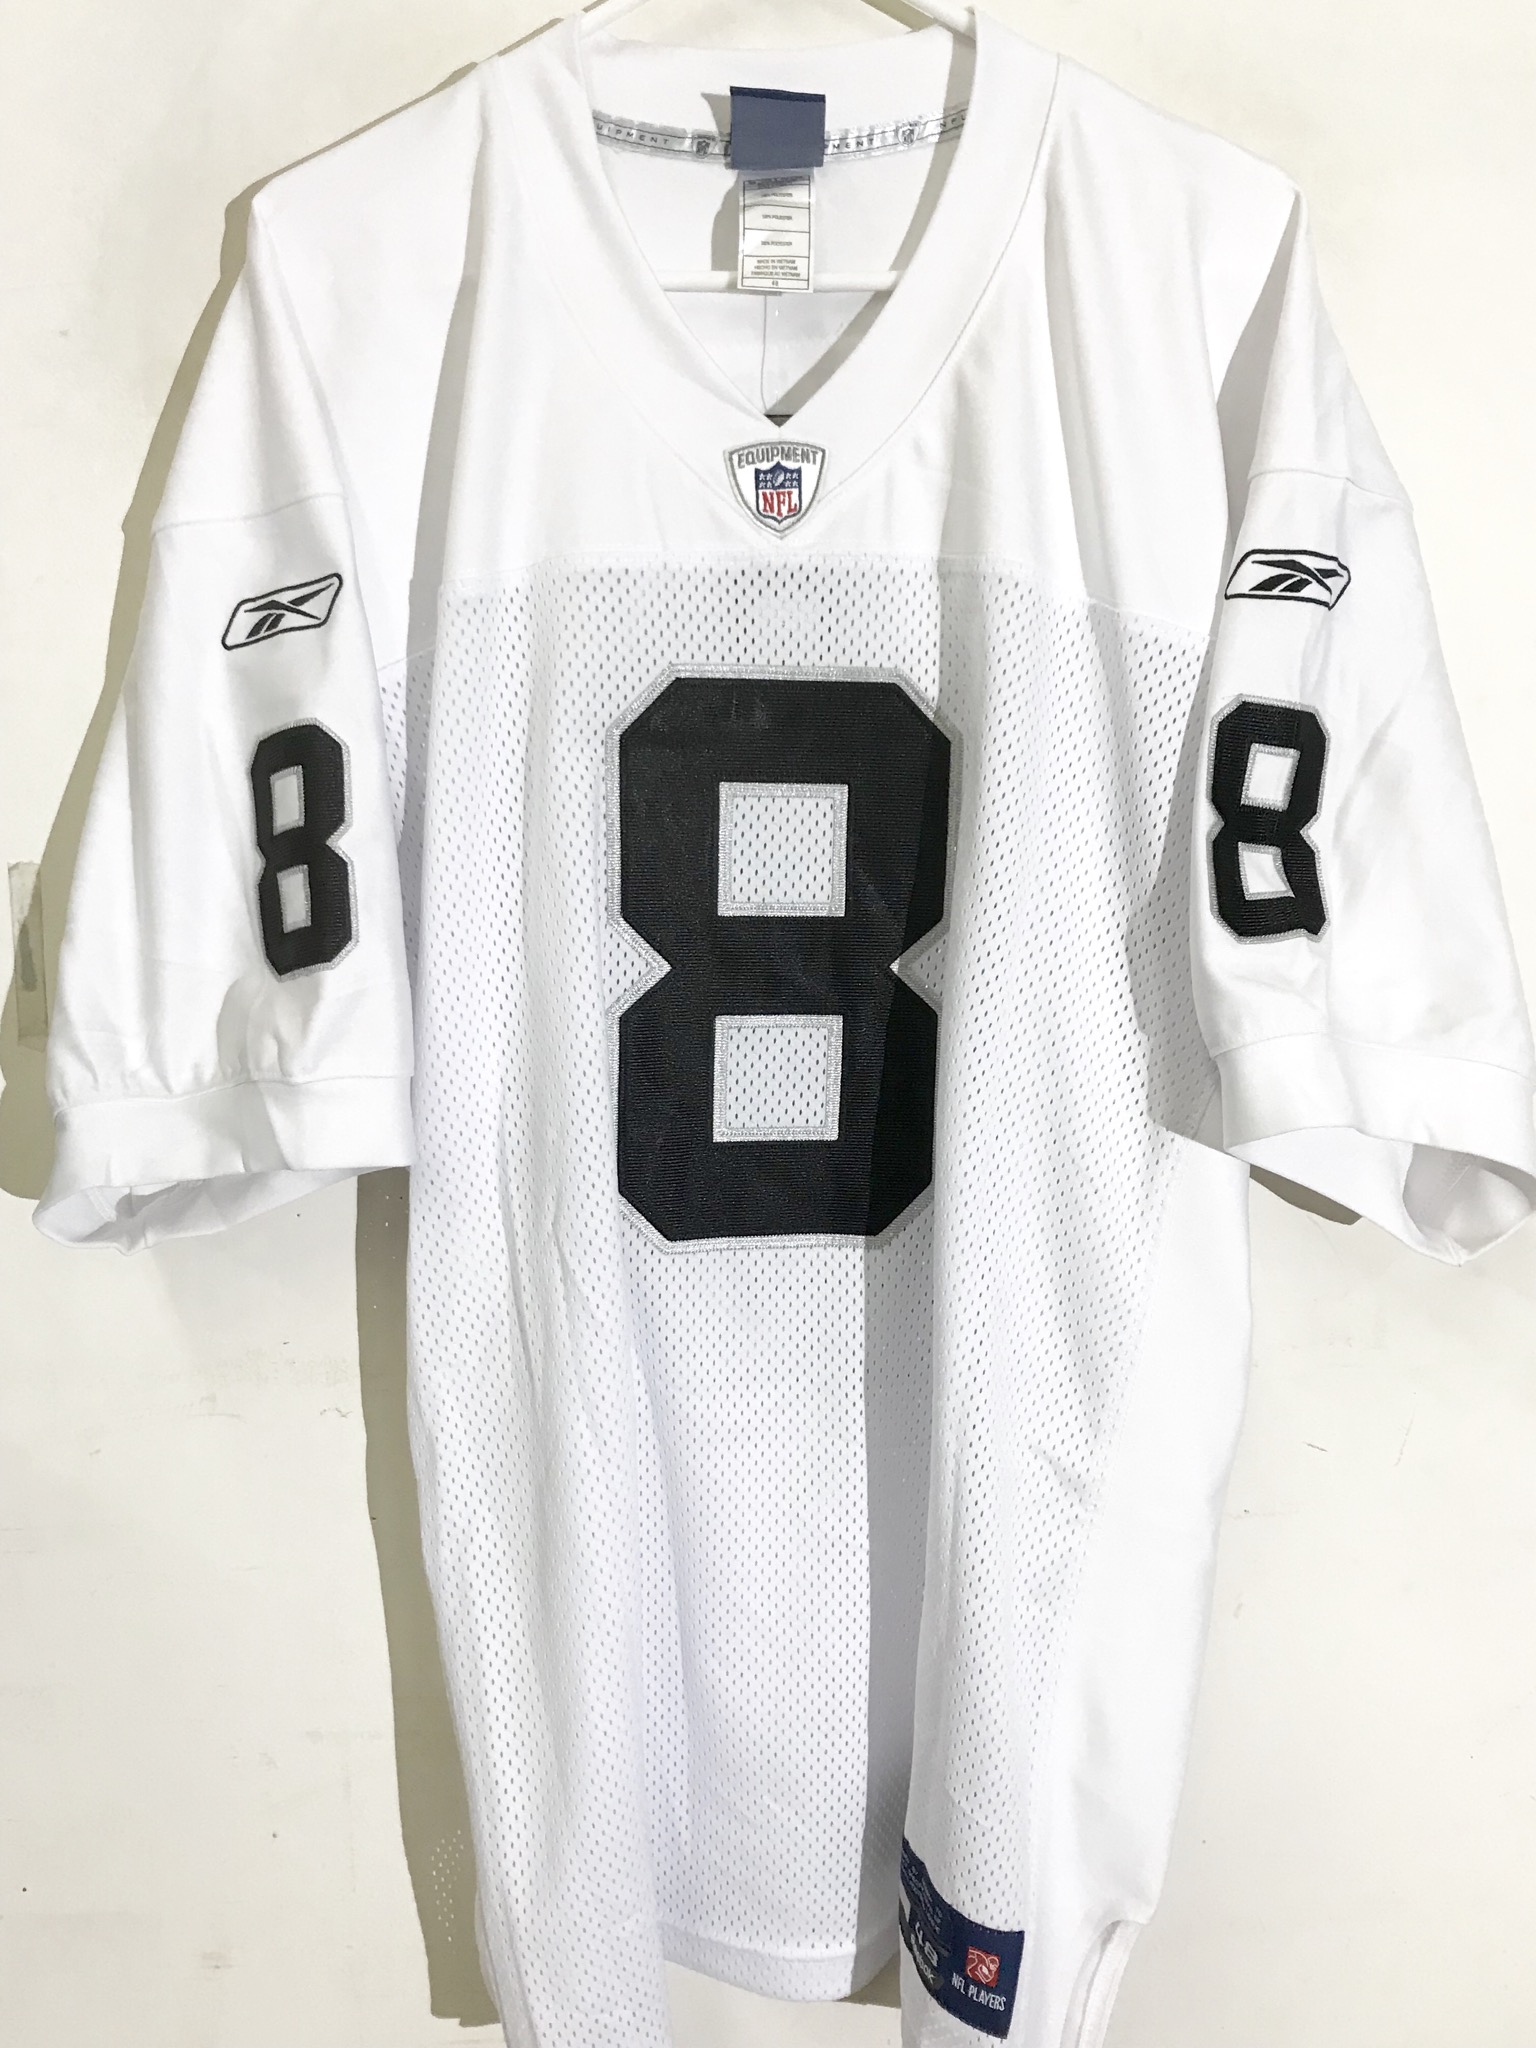 Reebok Authentic NFL Jersey Oakland Raiders Ray Guy White sz 52 | eBay